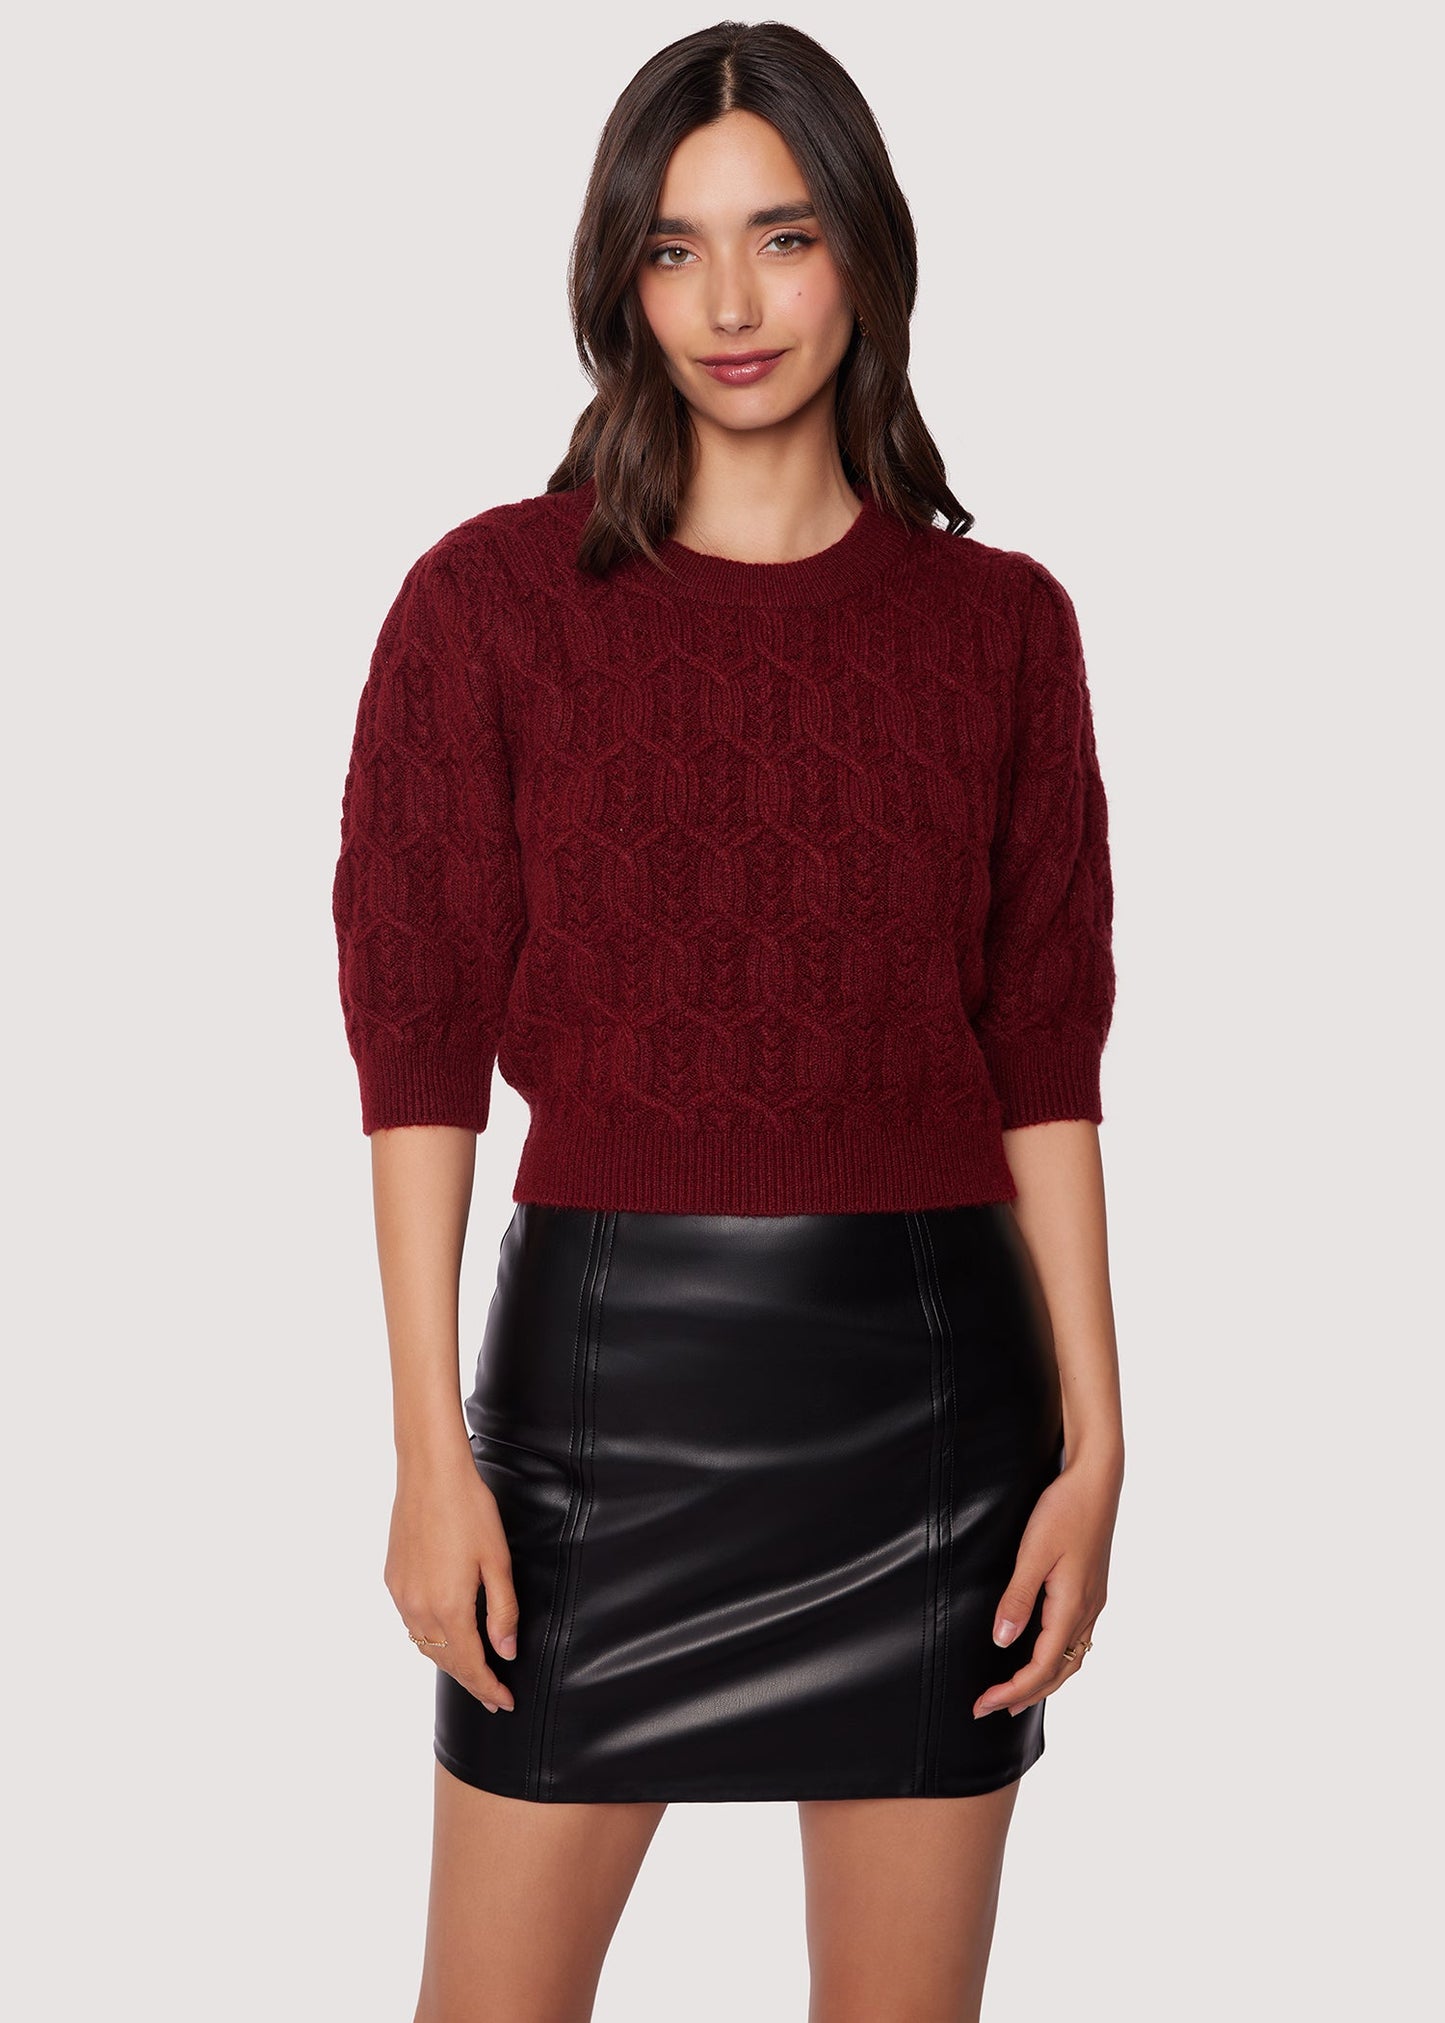 Sydney Short Sleeve Sweater